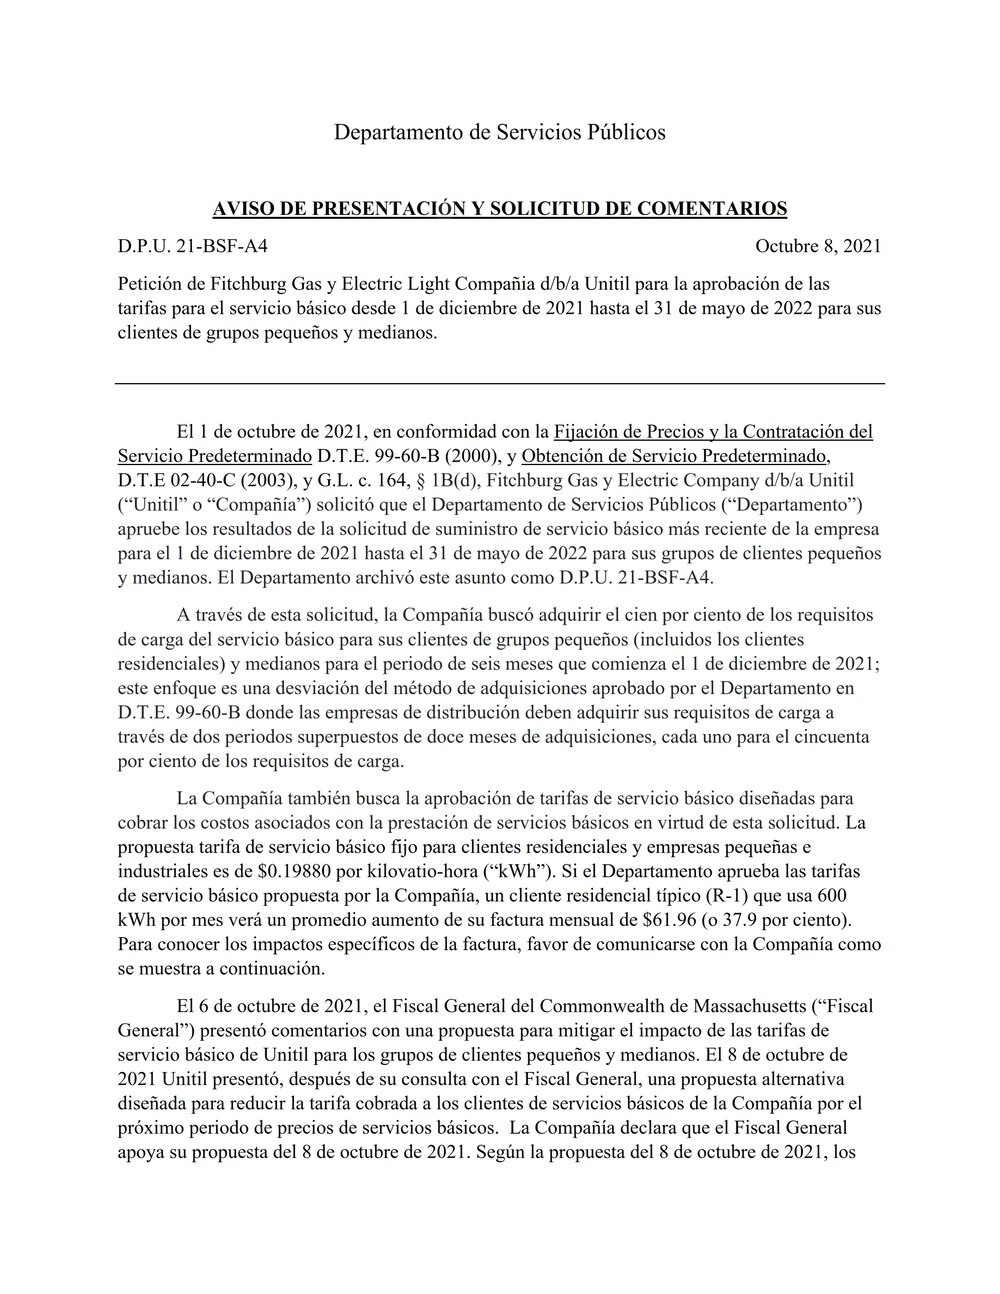 DPU 21-BSF-A4 Notice of Filing_Spanish_001.jpg